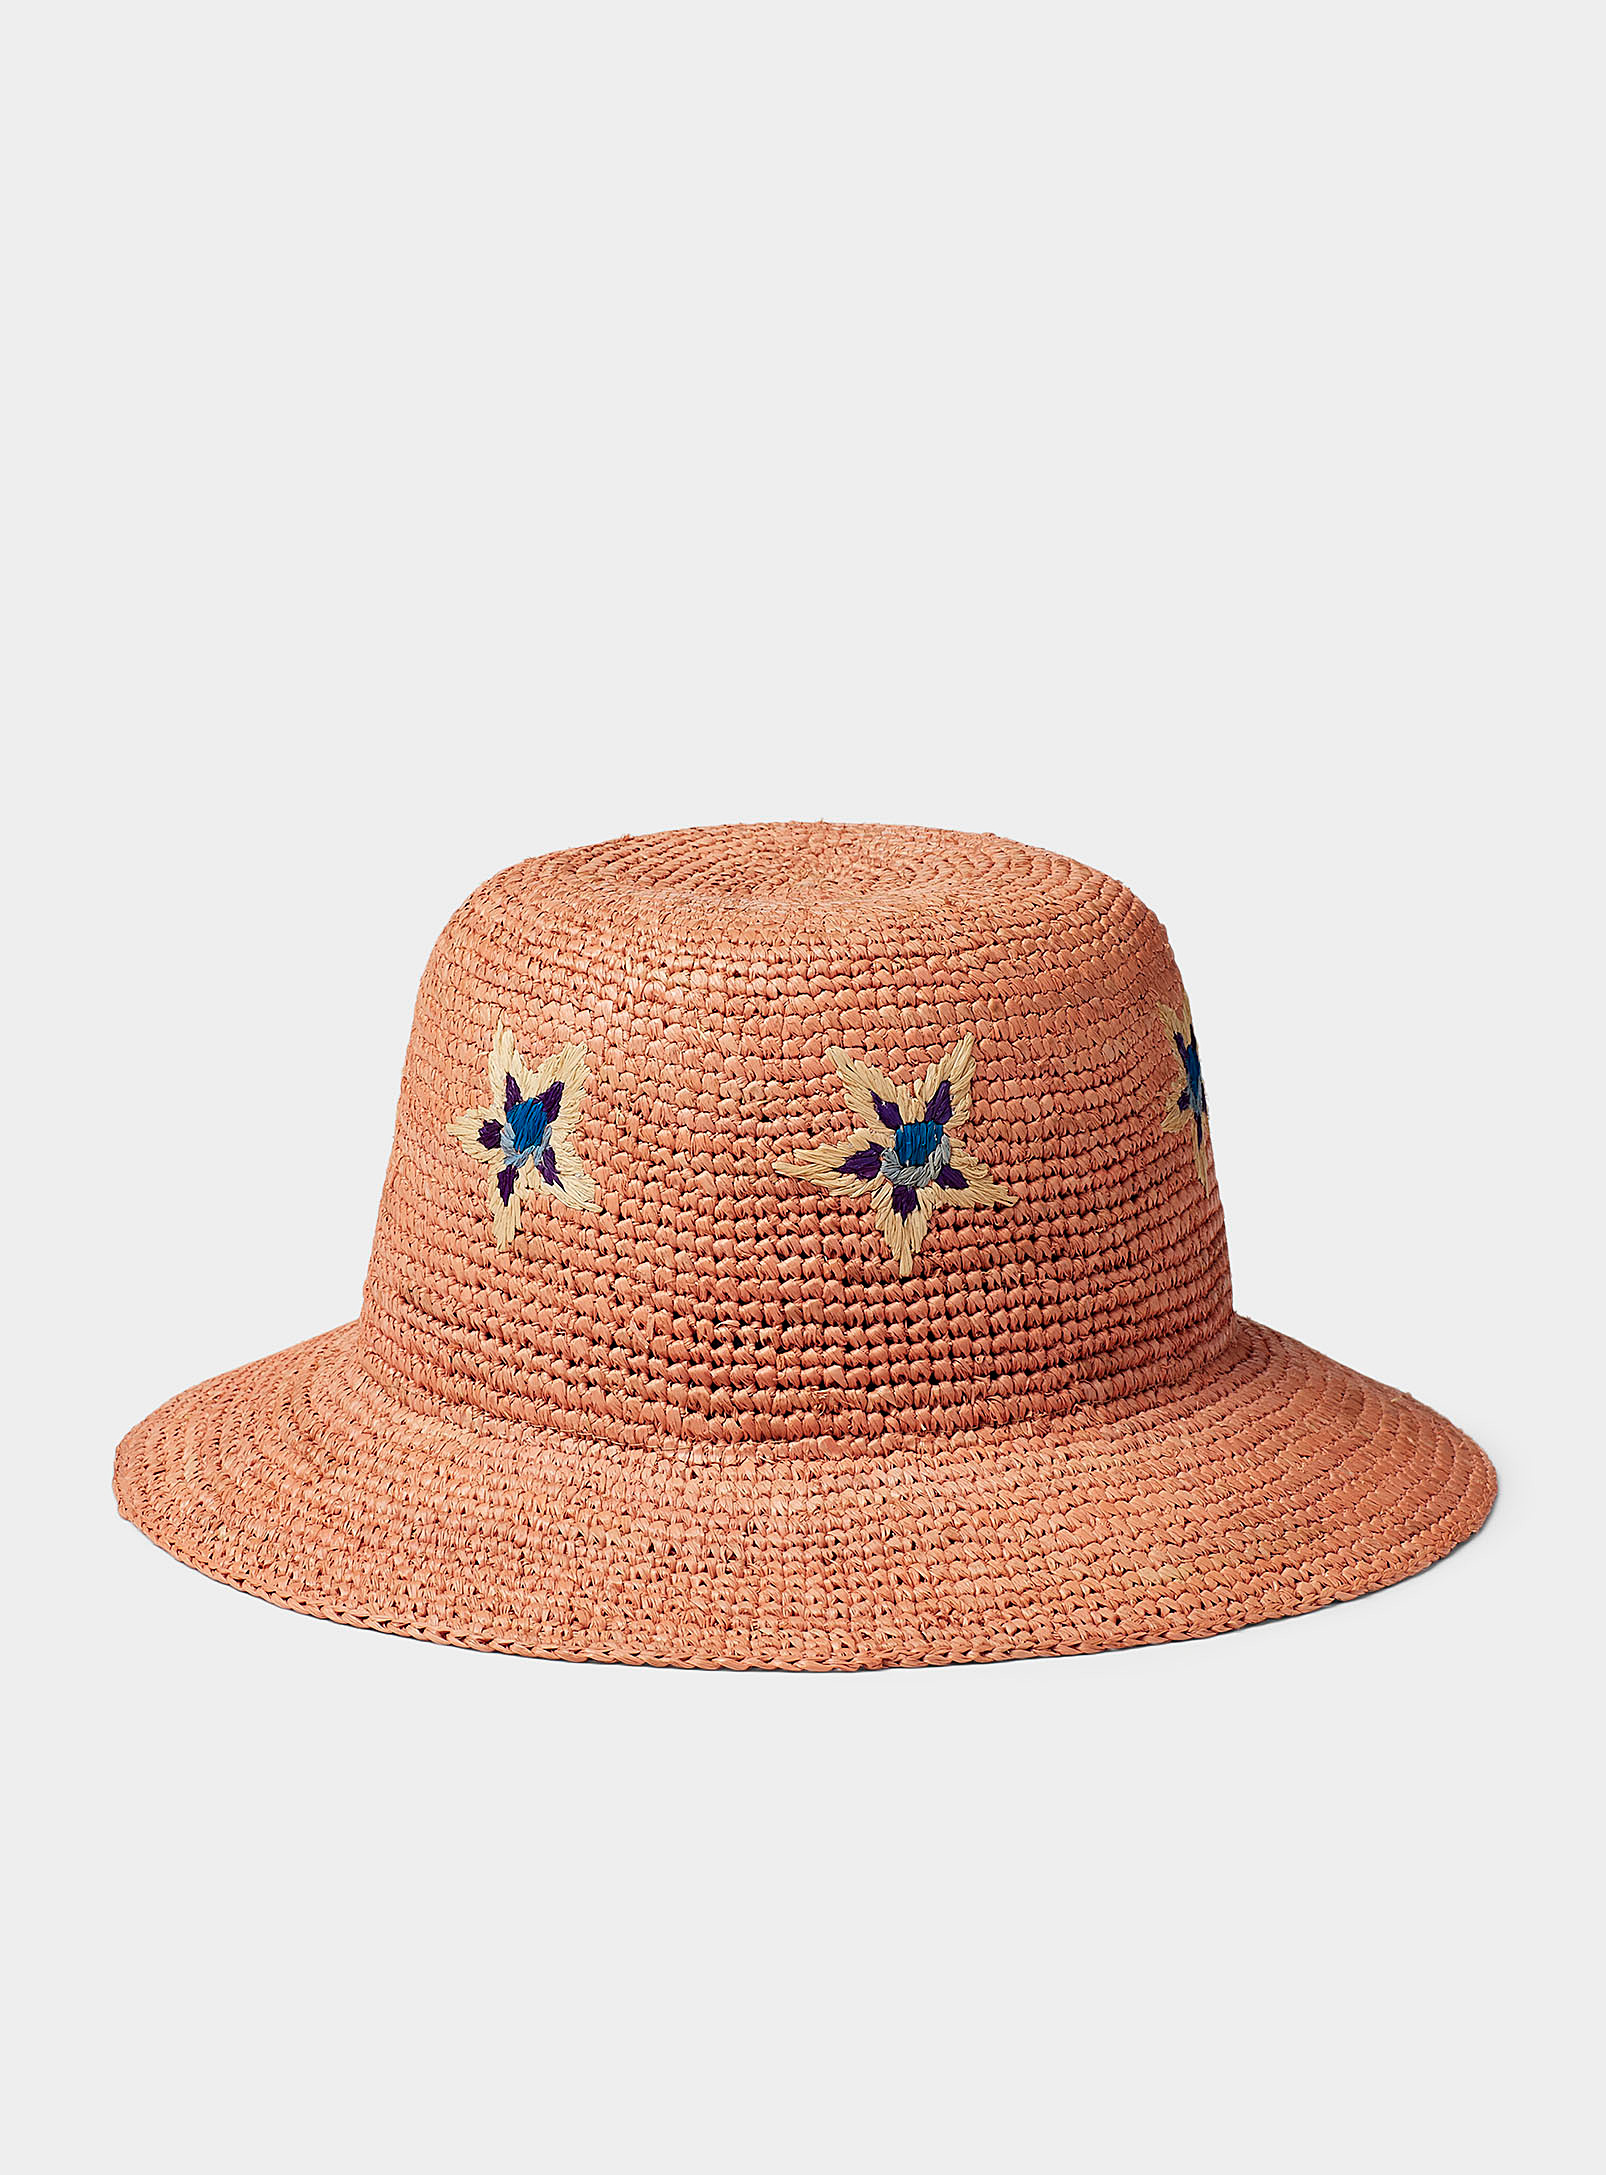 Gardening Womens Straw Sun Hat with Bow